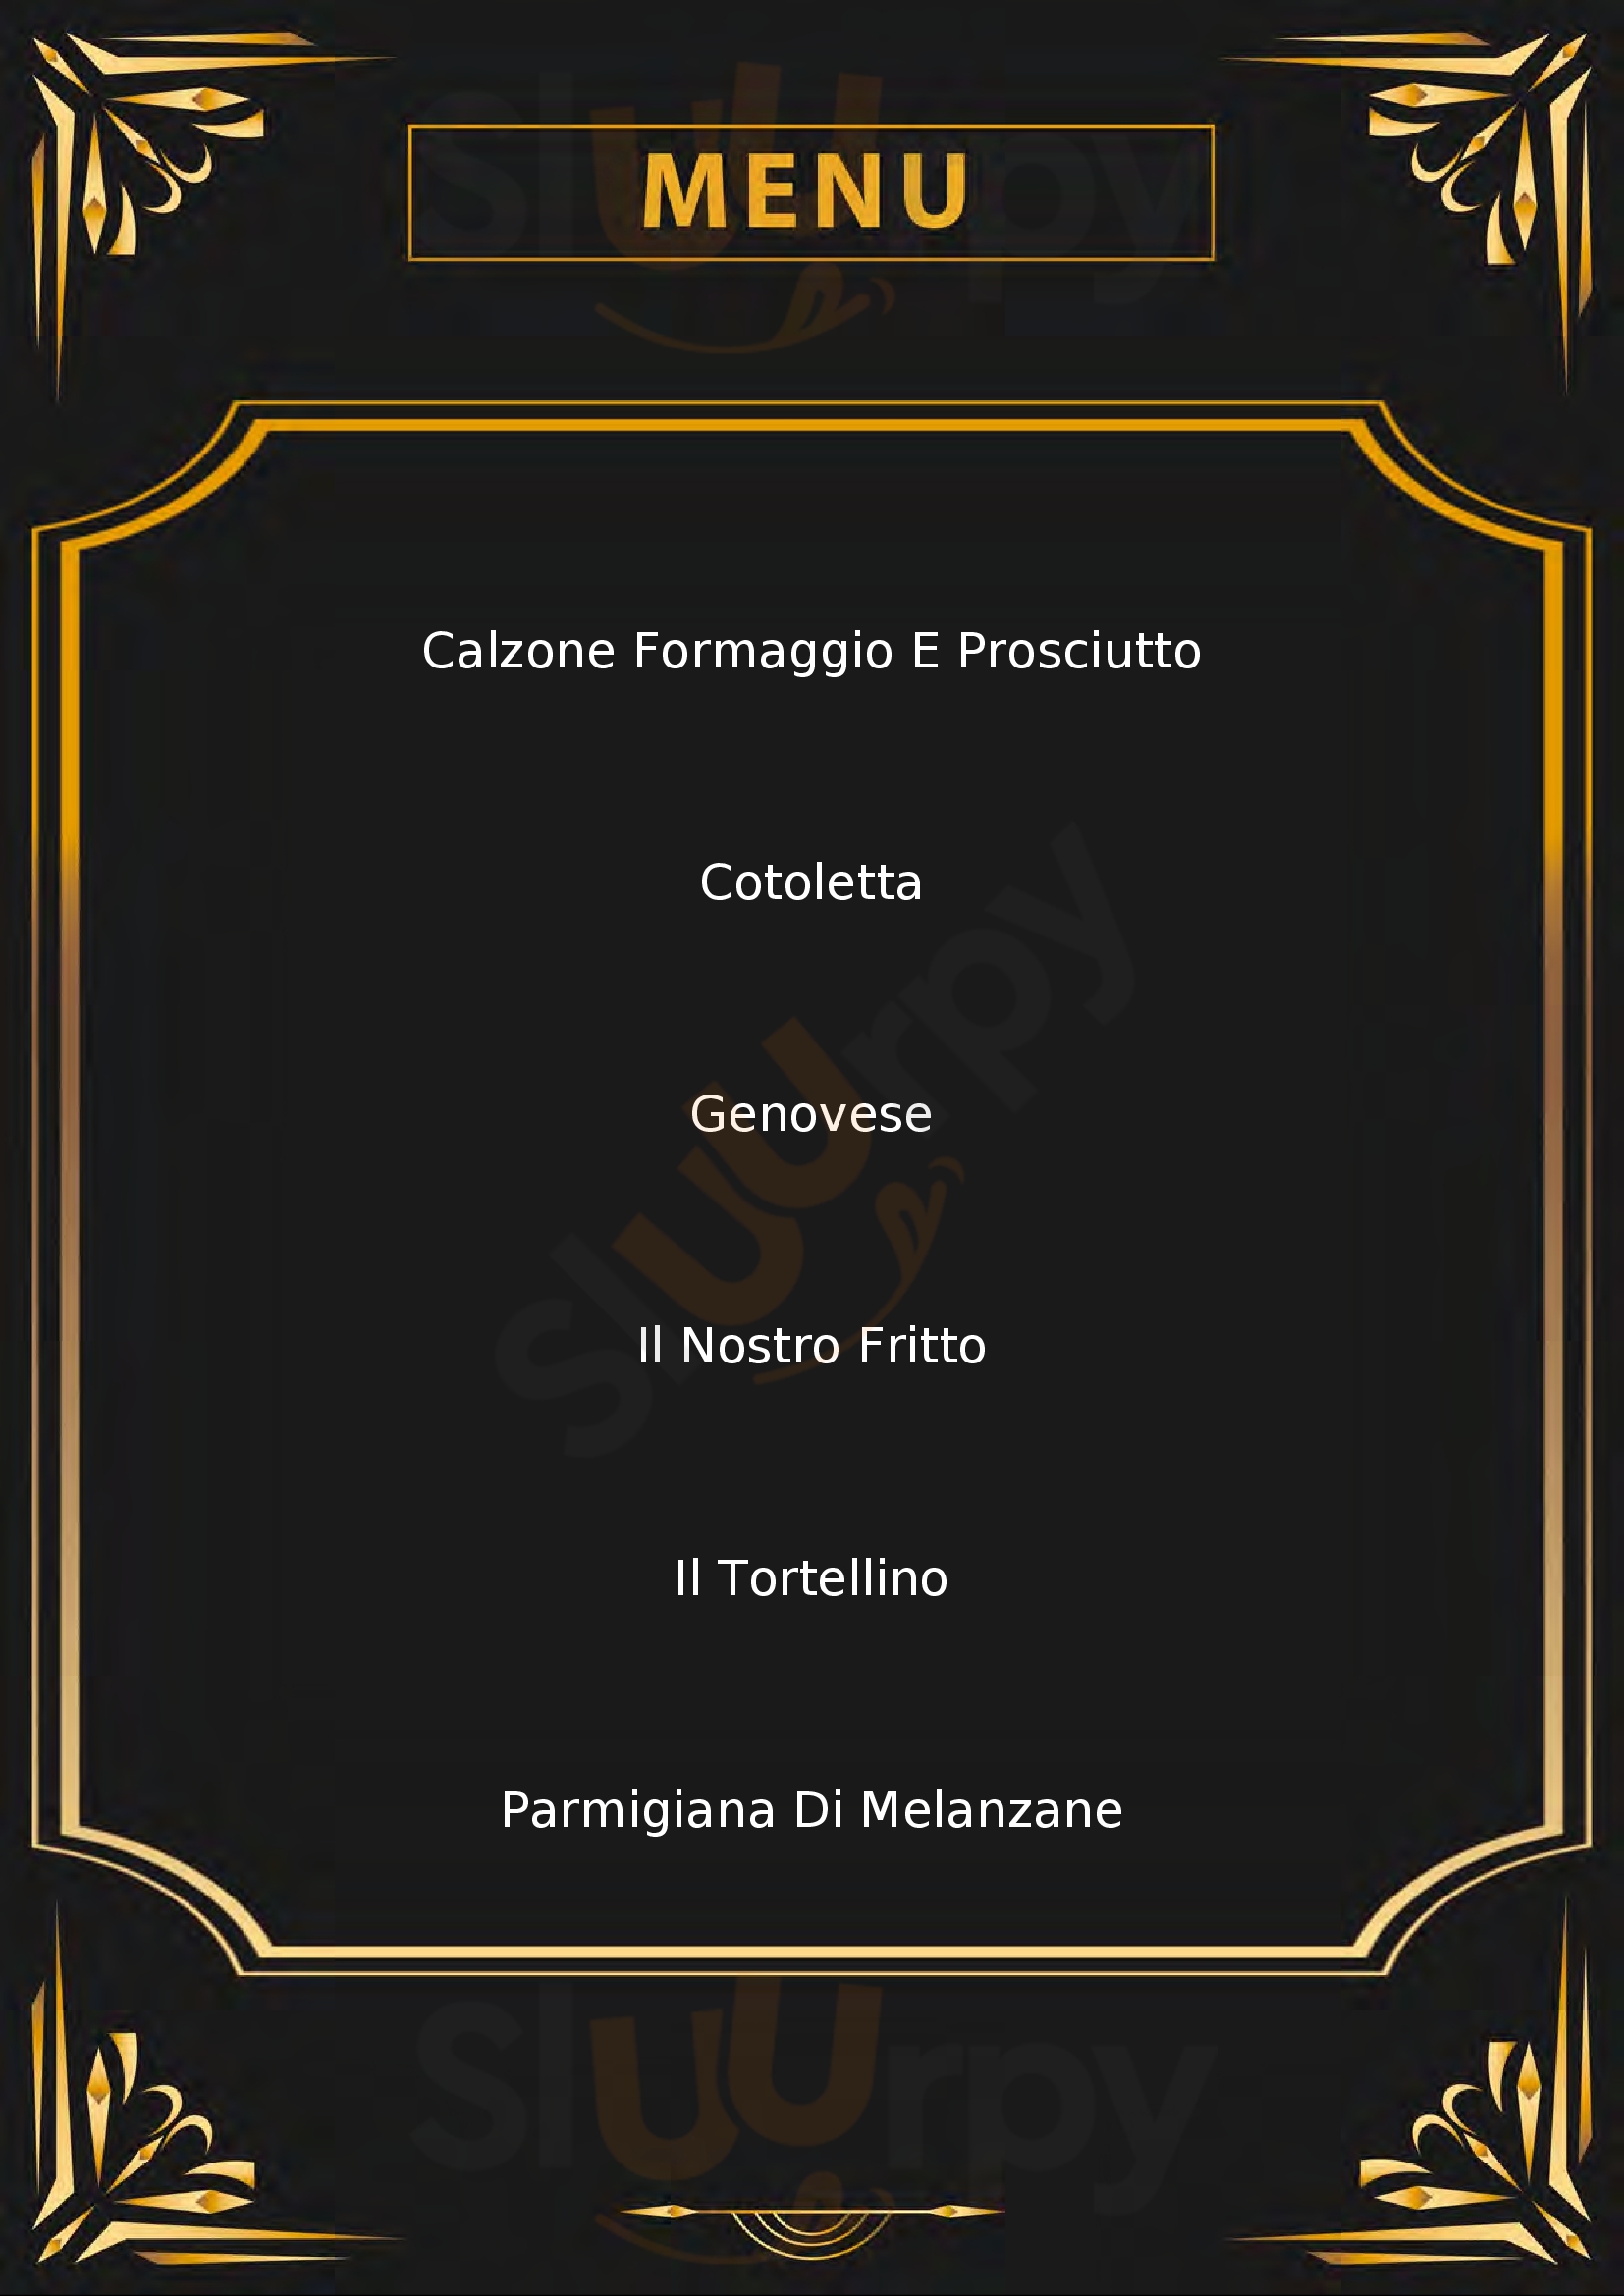 Rosmarino Pizza & Cucina Bologna menù 1 pagina